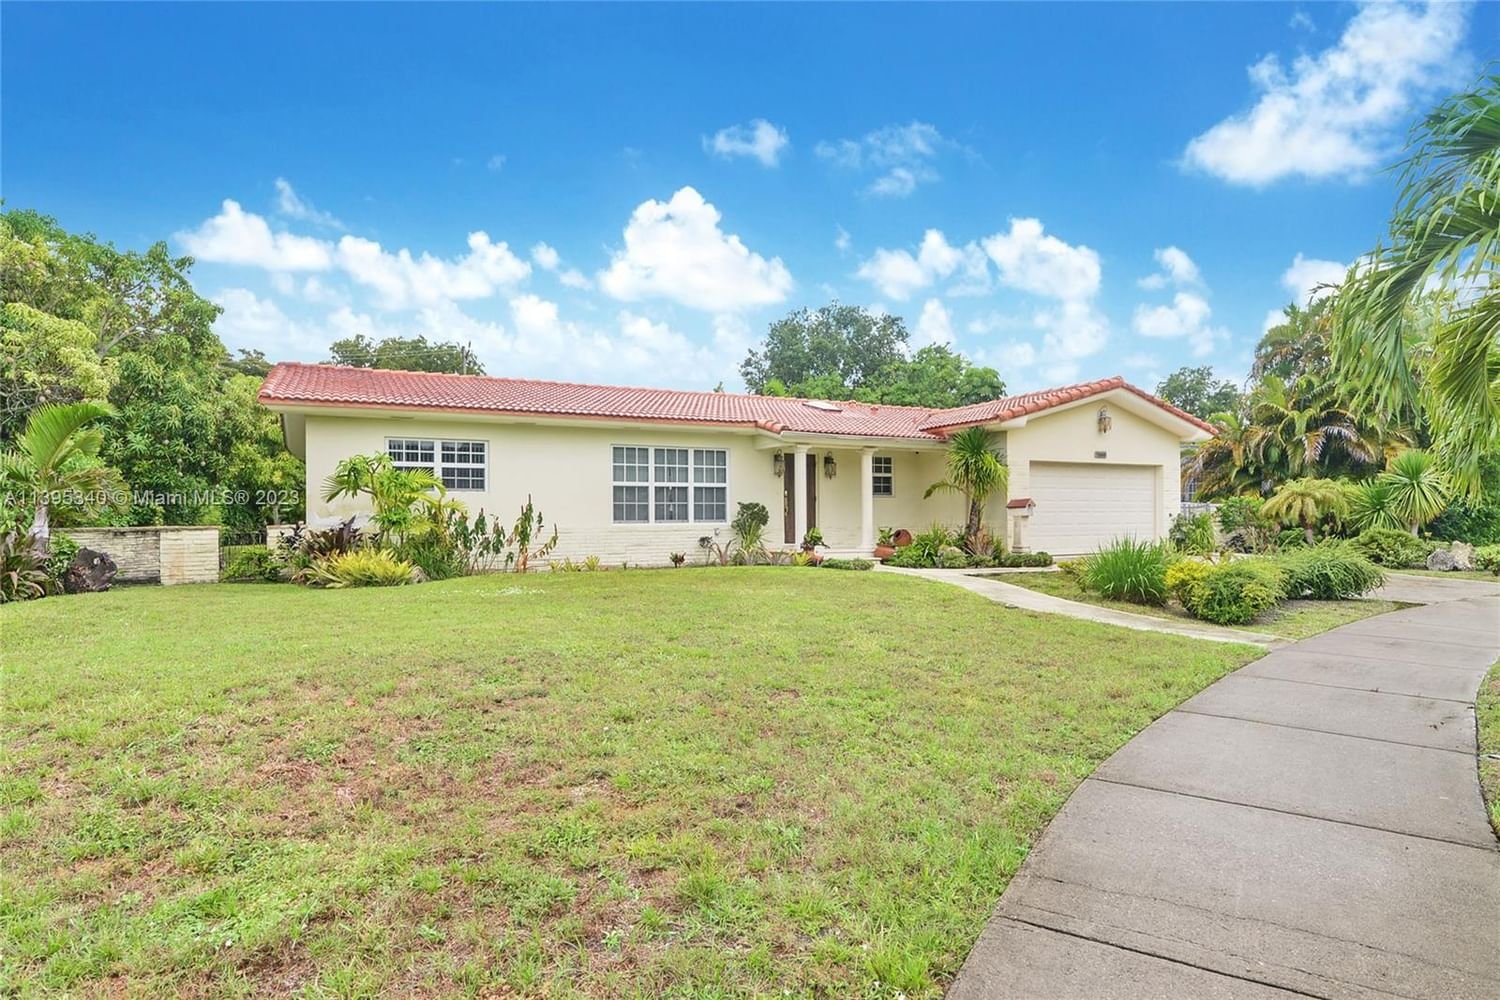 Real estate property located at 19410 21st Ct, Miami-Dade County, Miami, FL